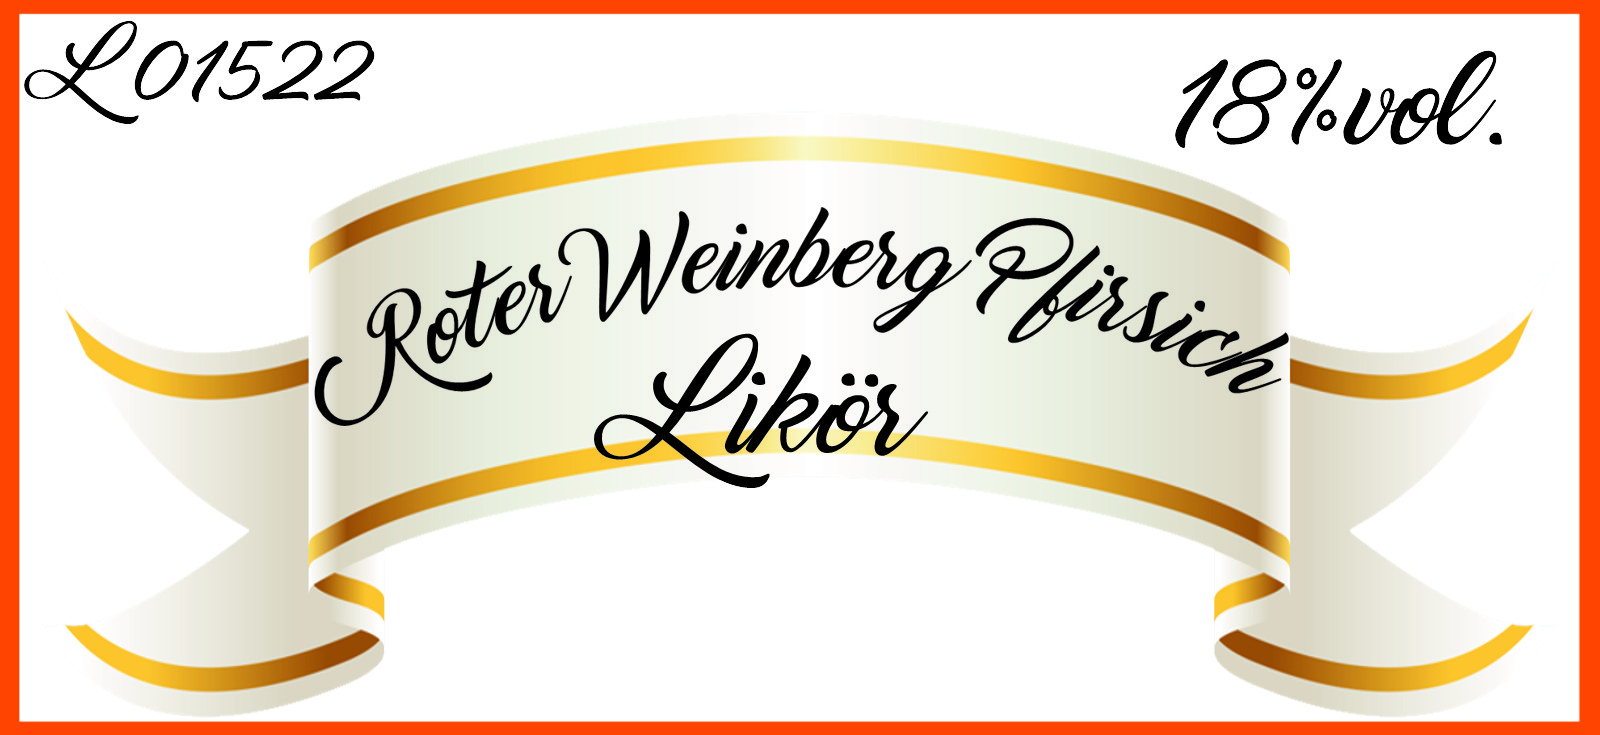 Roter-Weinberg-Pfirsich-Likoer